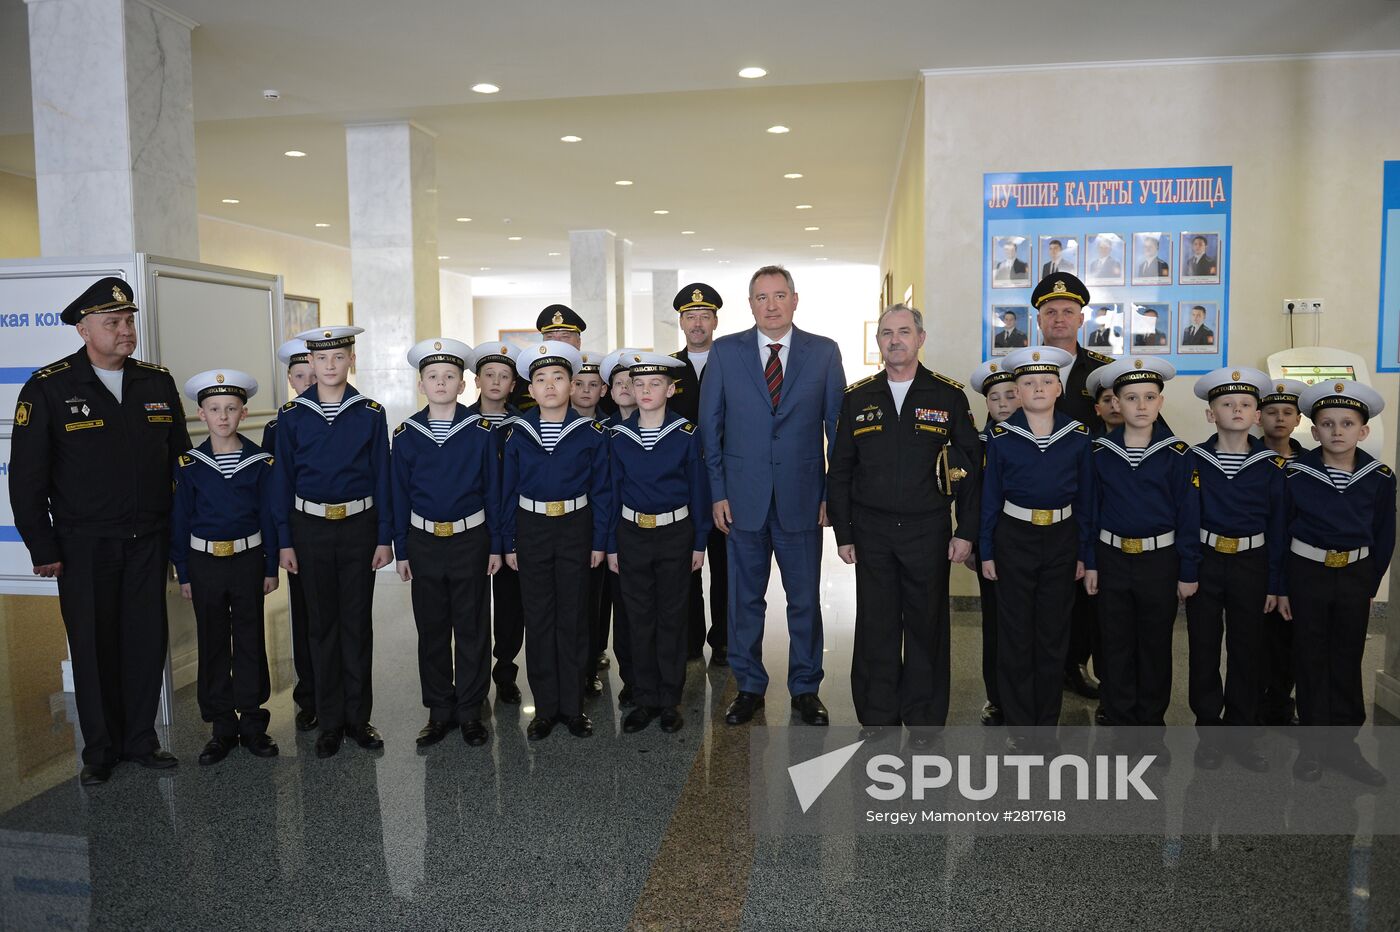 Deputy Prime Minister Rogozin visits Crimea